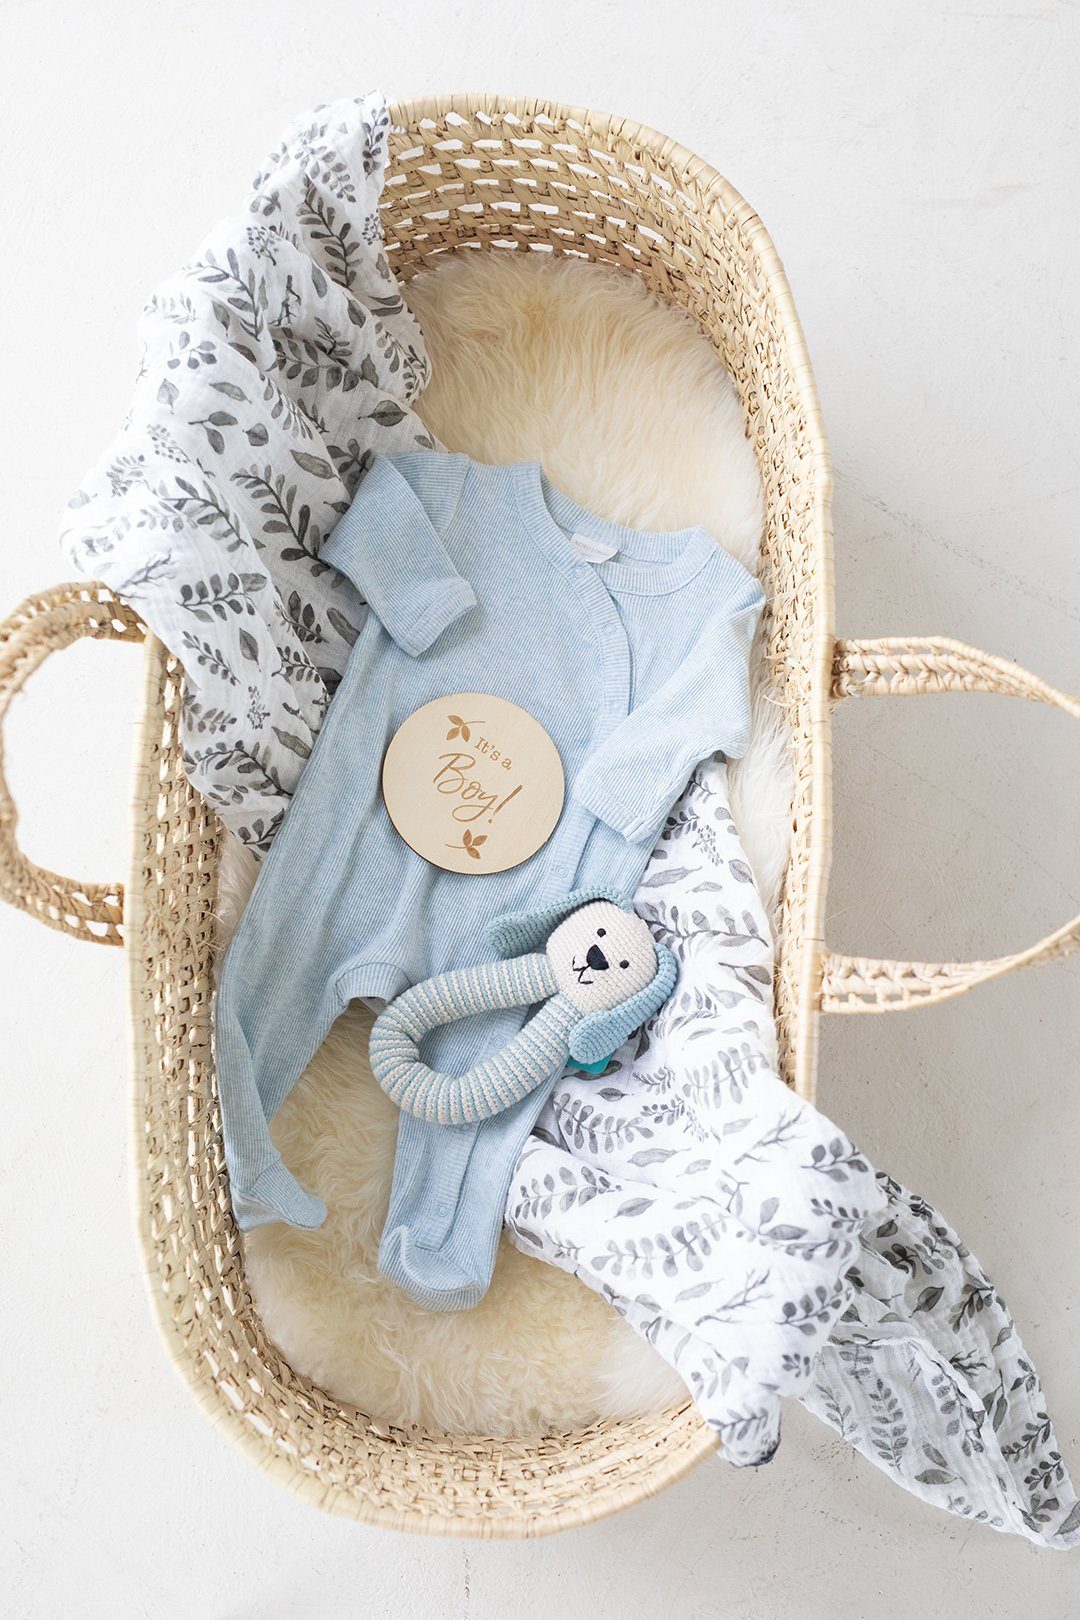 Baby Shower Gift - Handmade Moses Basket in Rabbit Design